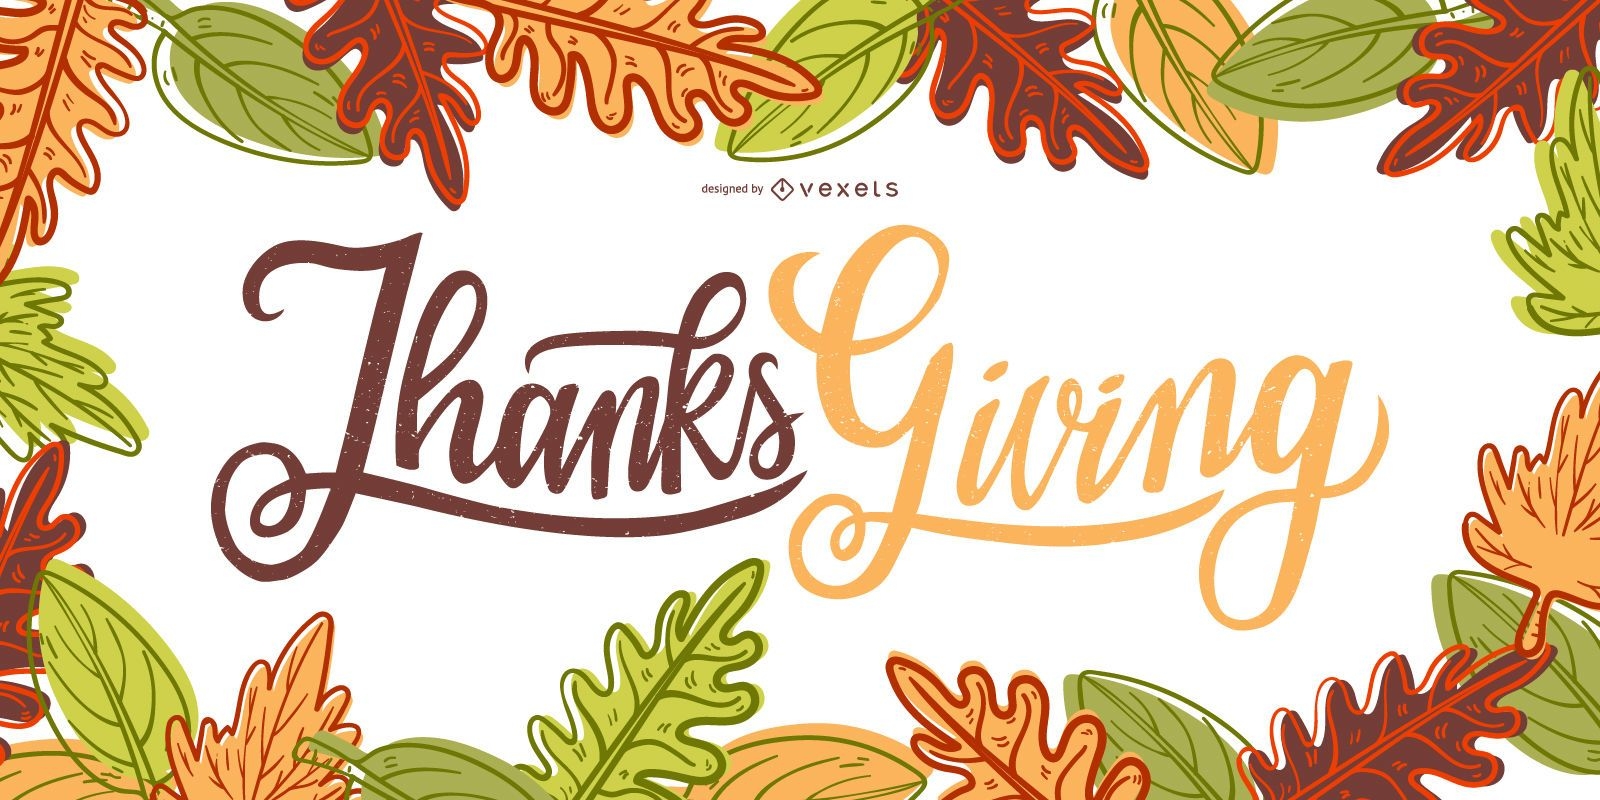 Thanksgiving banner design